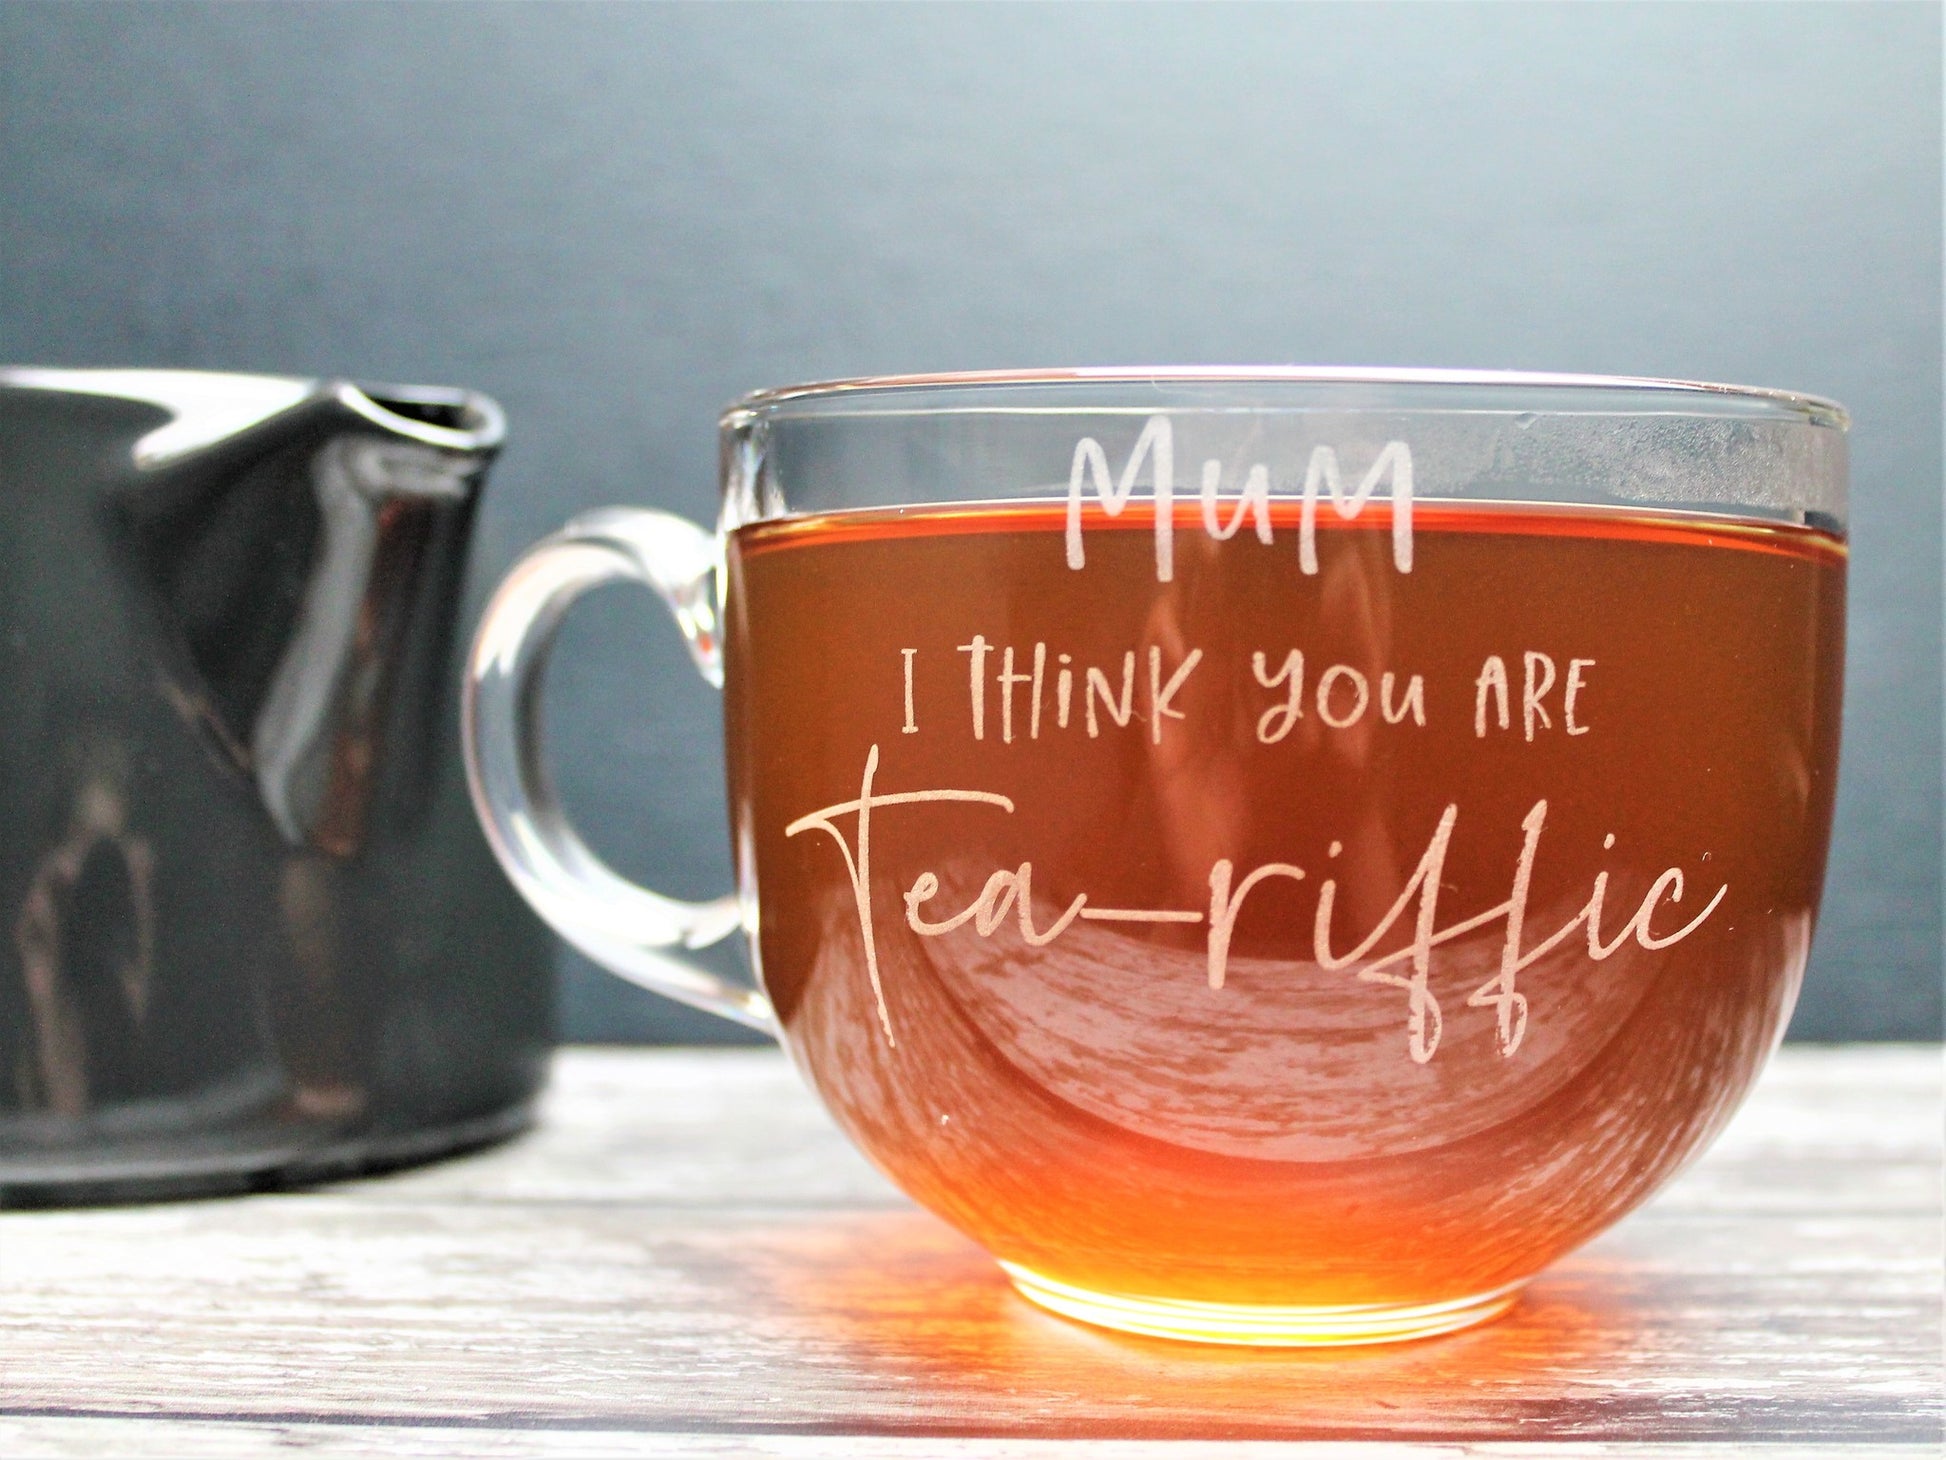 Large tea glass mug for mum